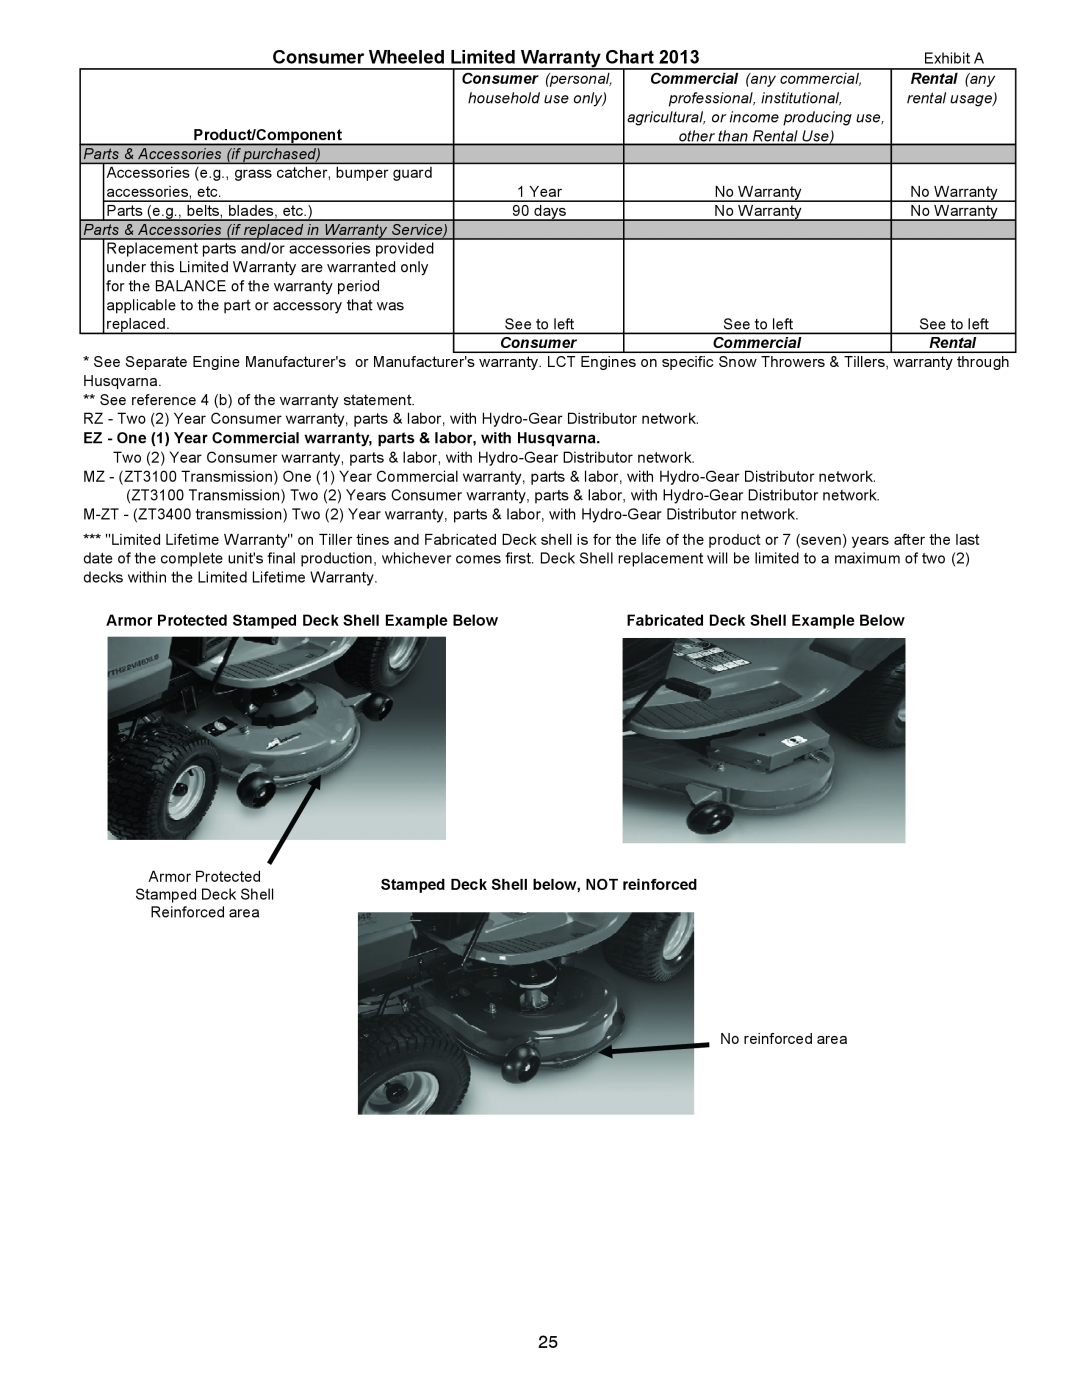 Husqvarna ST 324P warranty Consumer Wheeled Limited Warranty Chart, Product/Component 